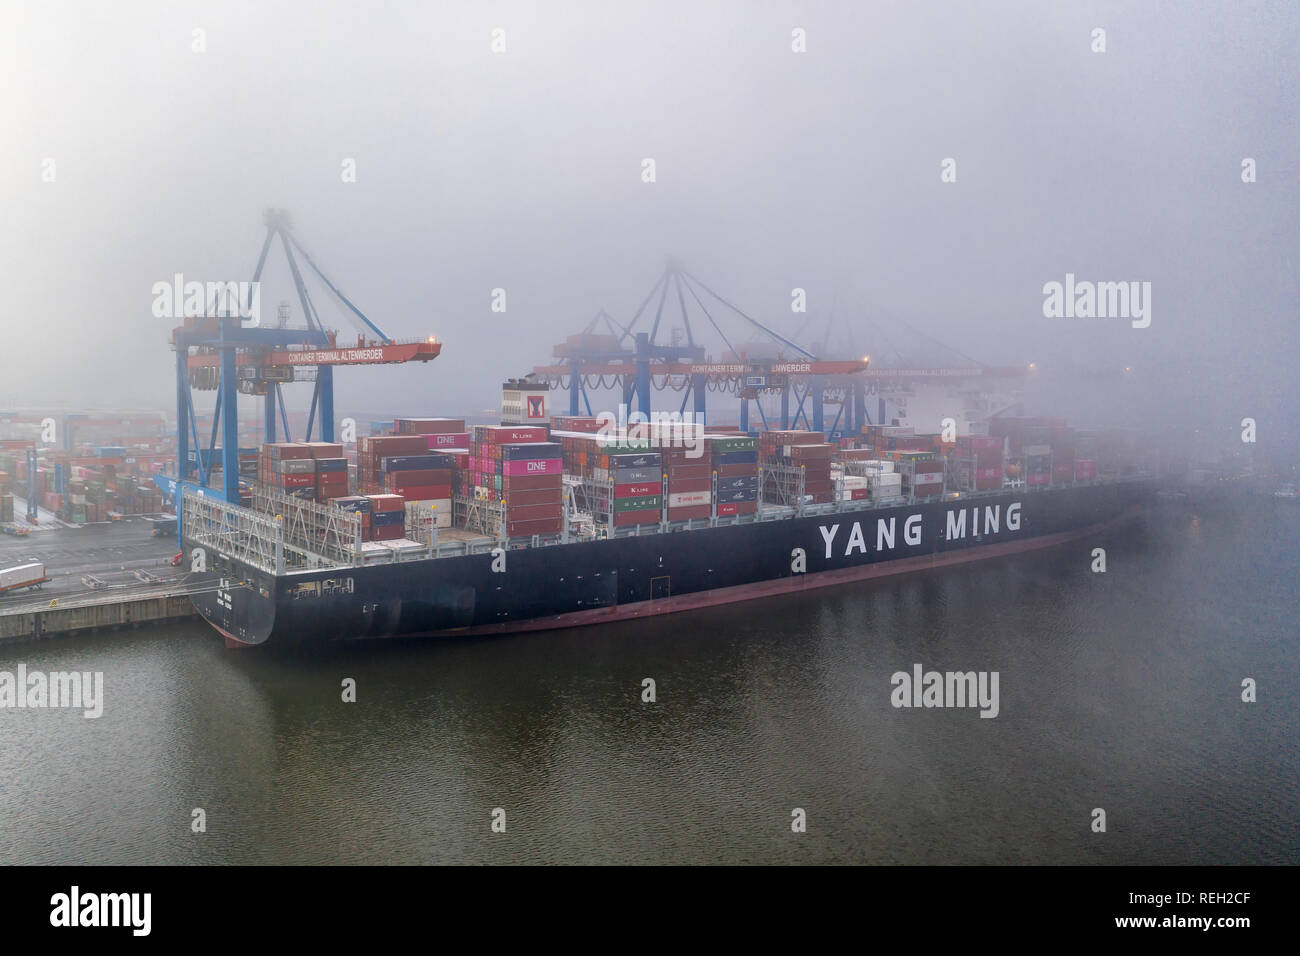 Yang Ming la nave portacontainer 'YM Wind" di Amburgo Foto Stock